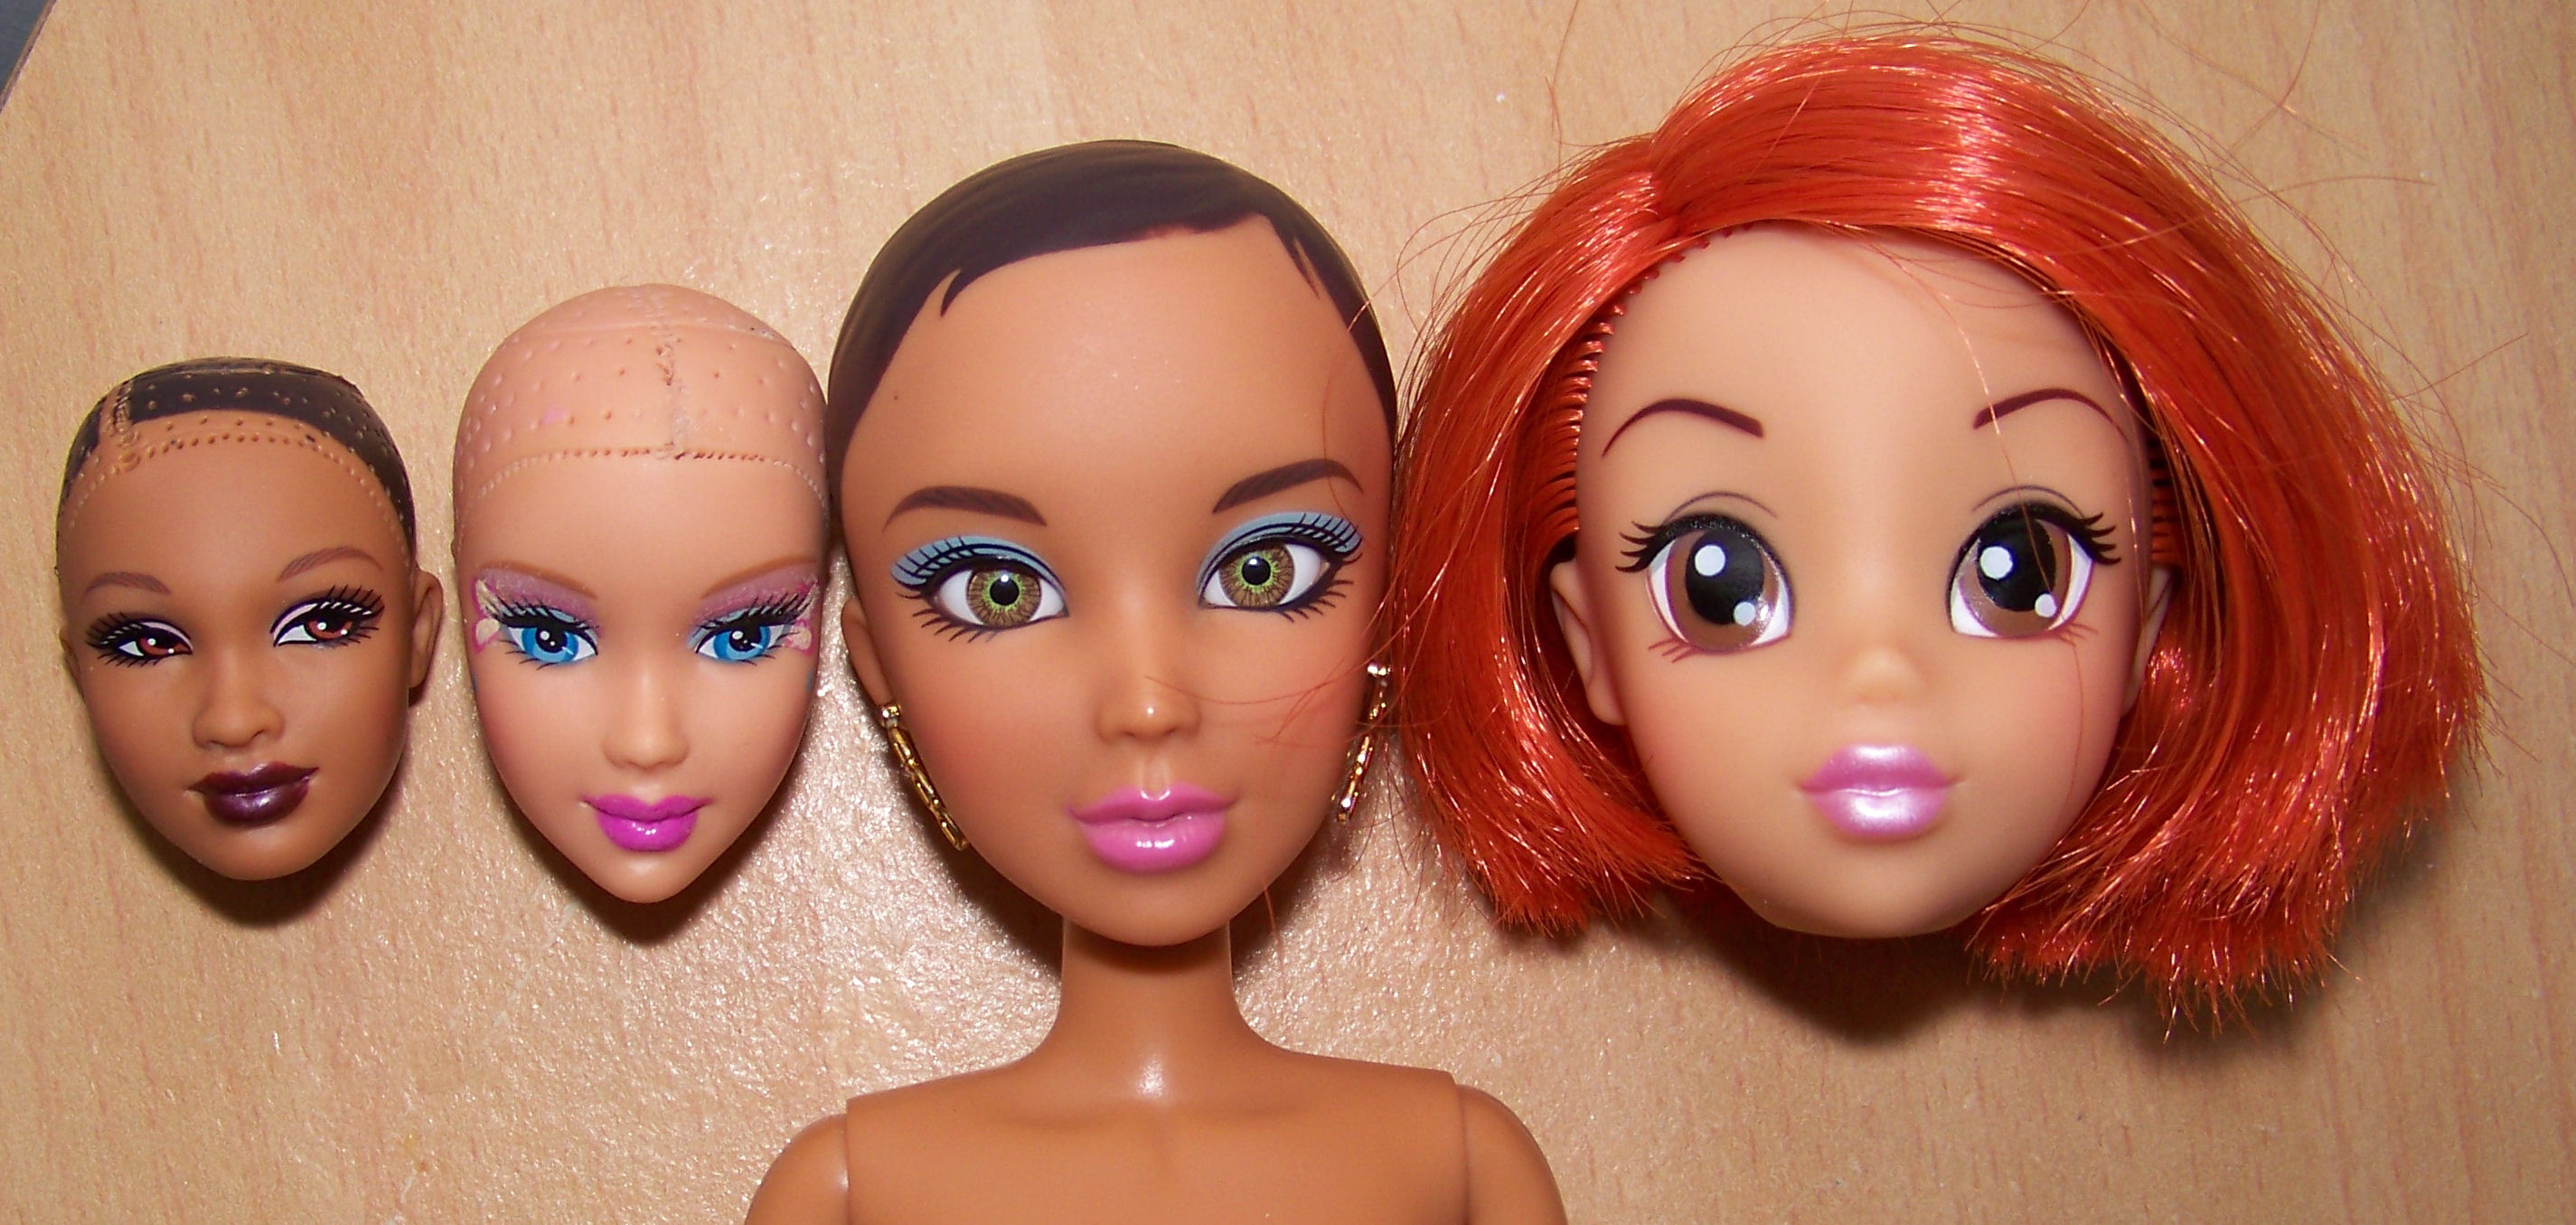 barbie head size